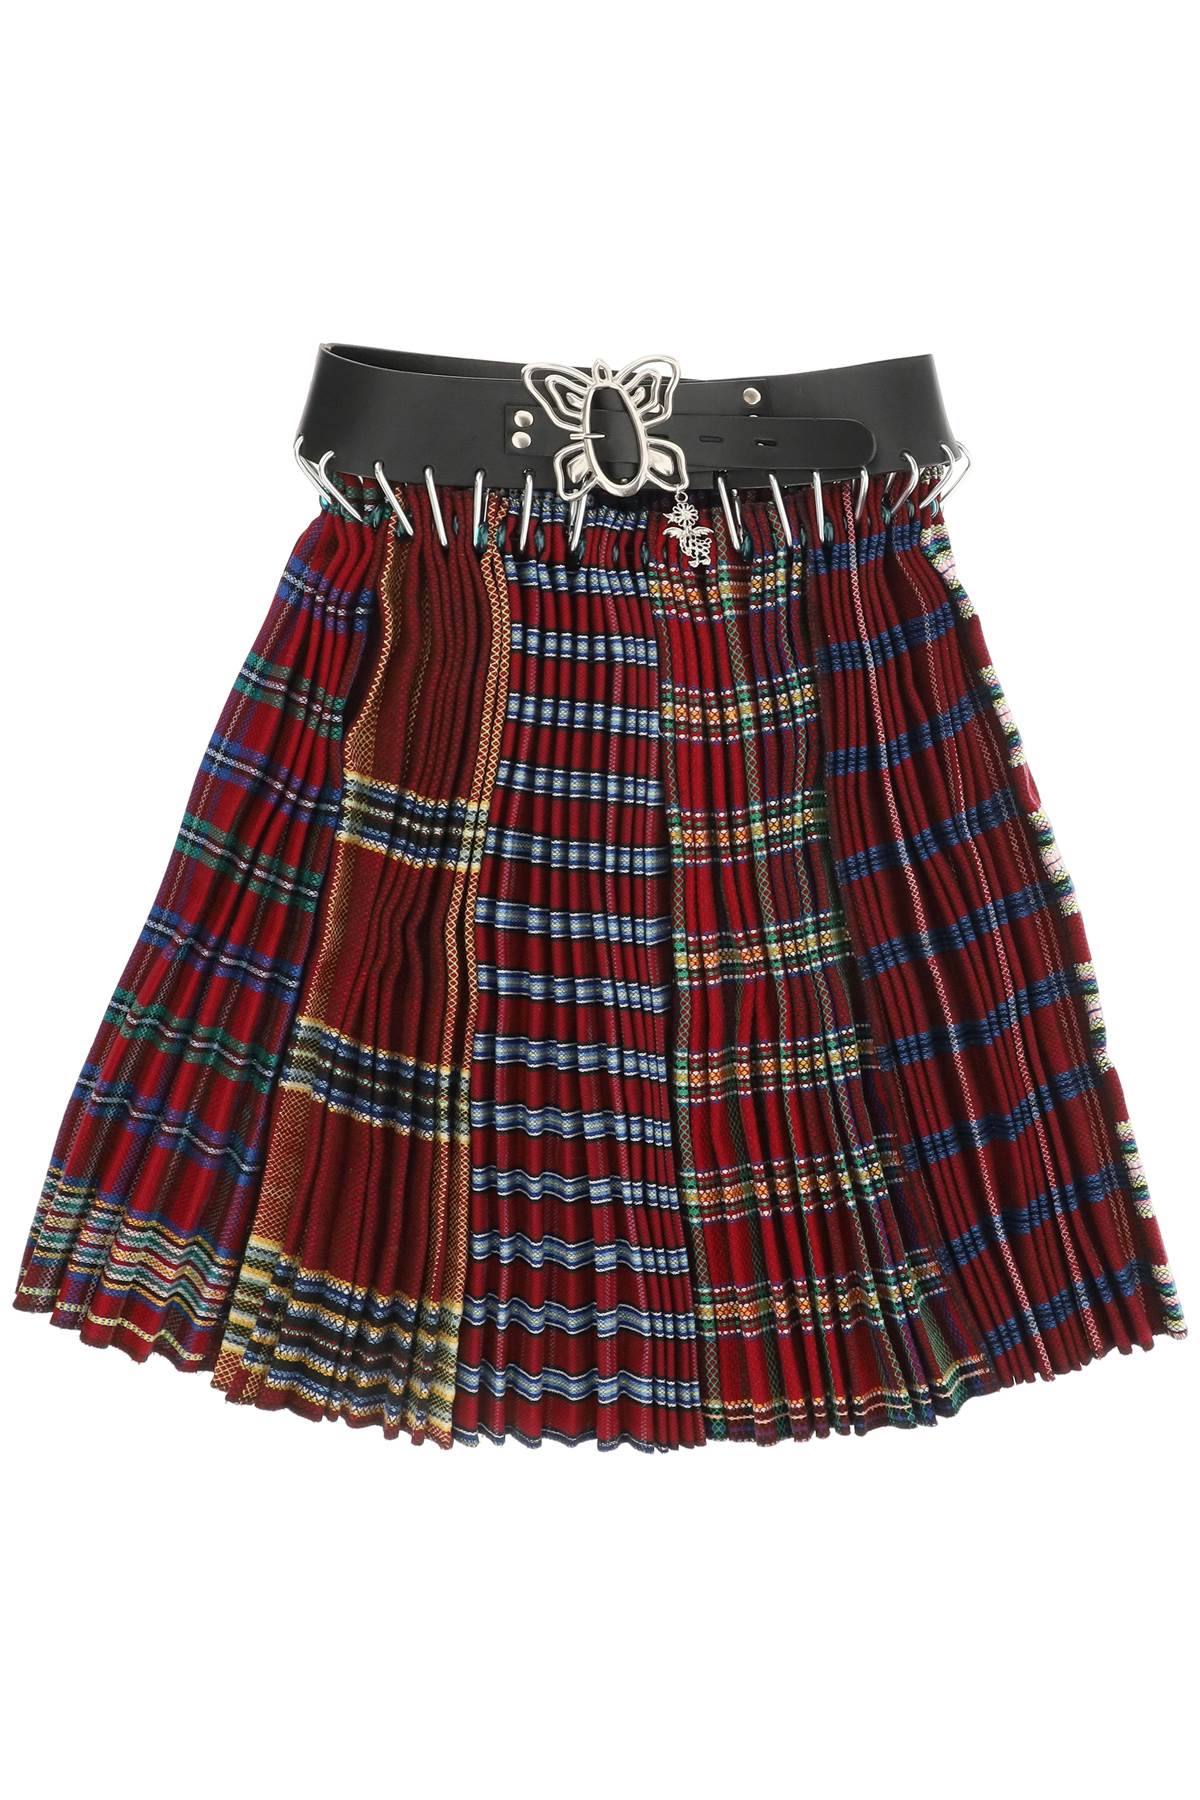 Chopova Lowena Pleated Skirt With Belt